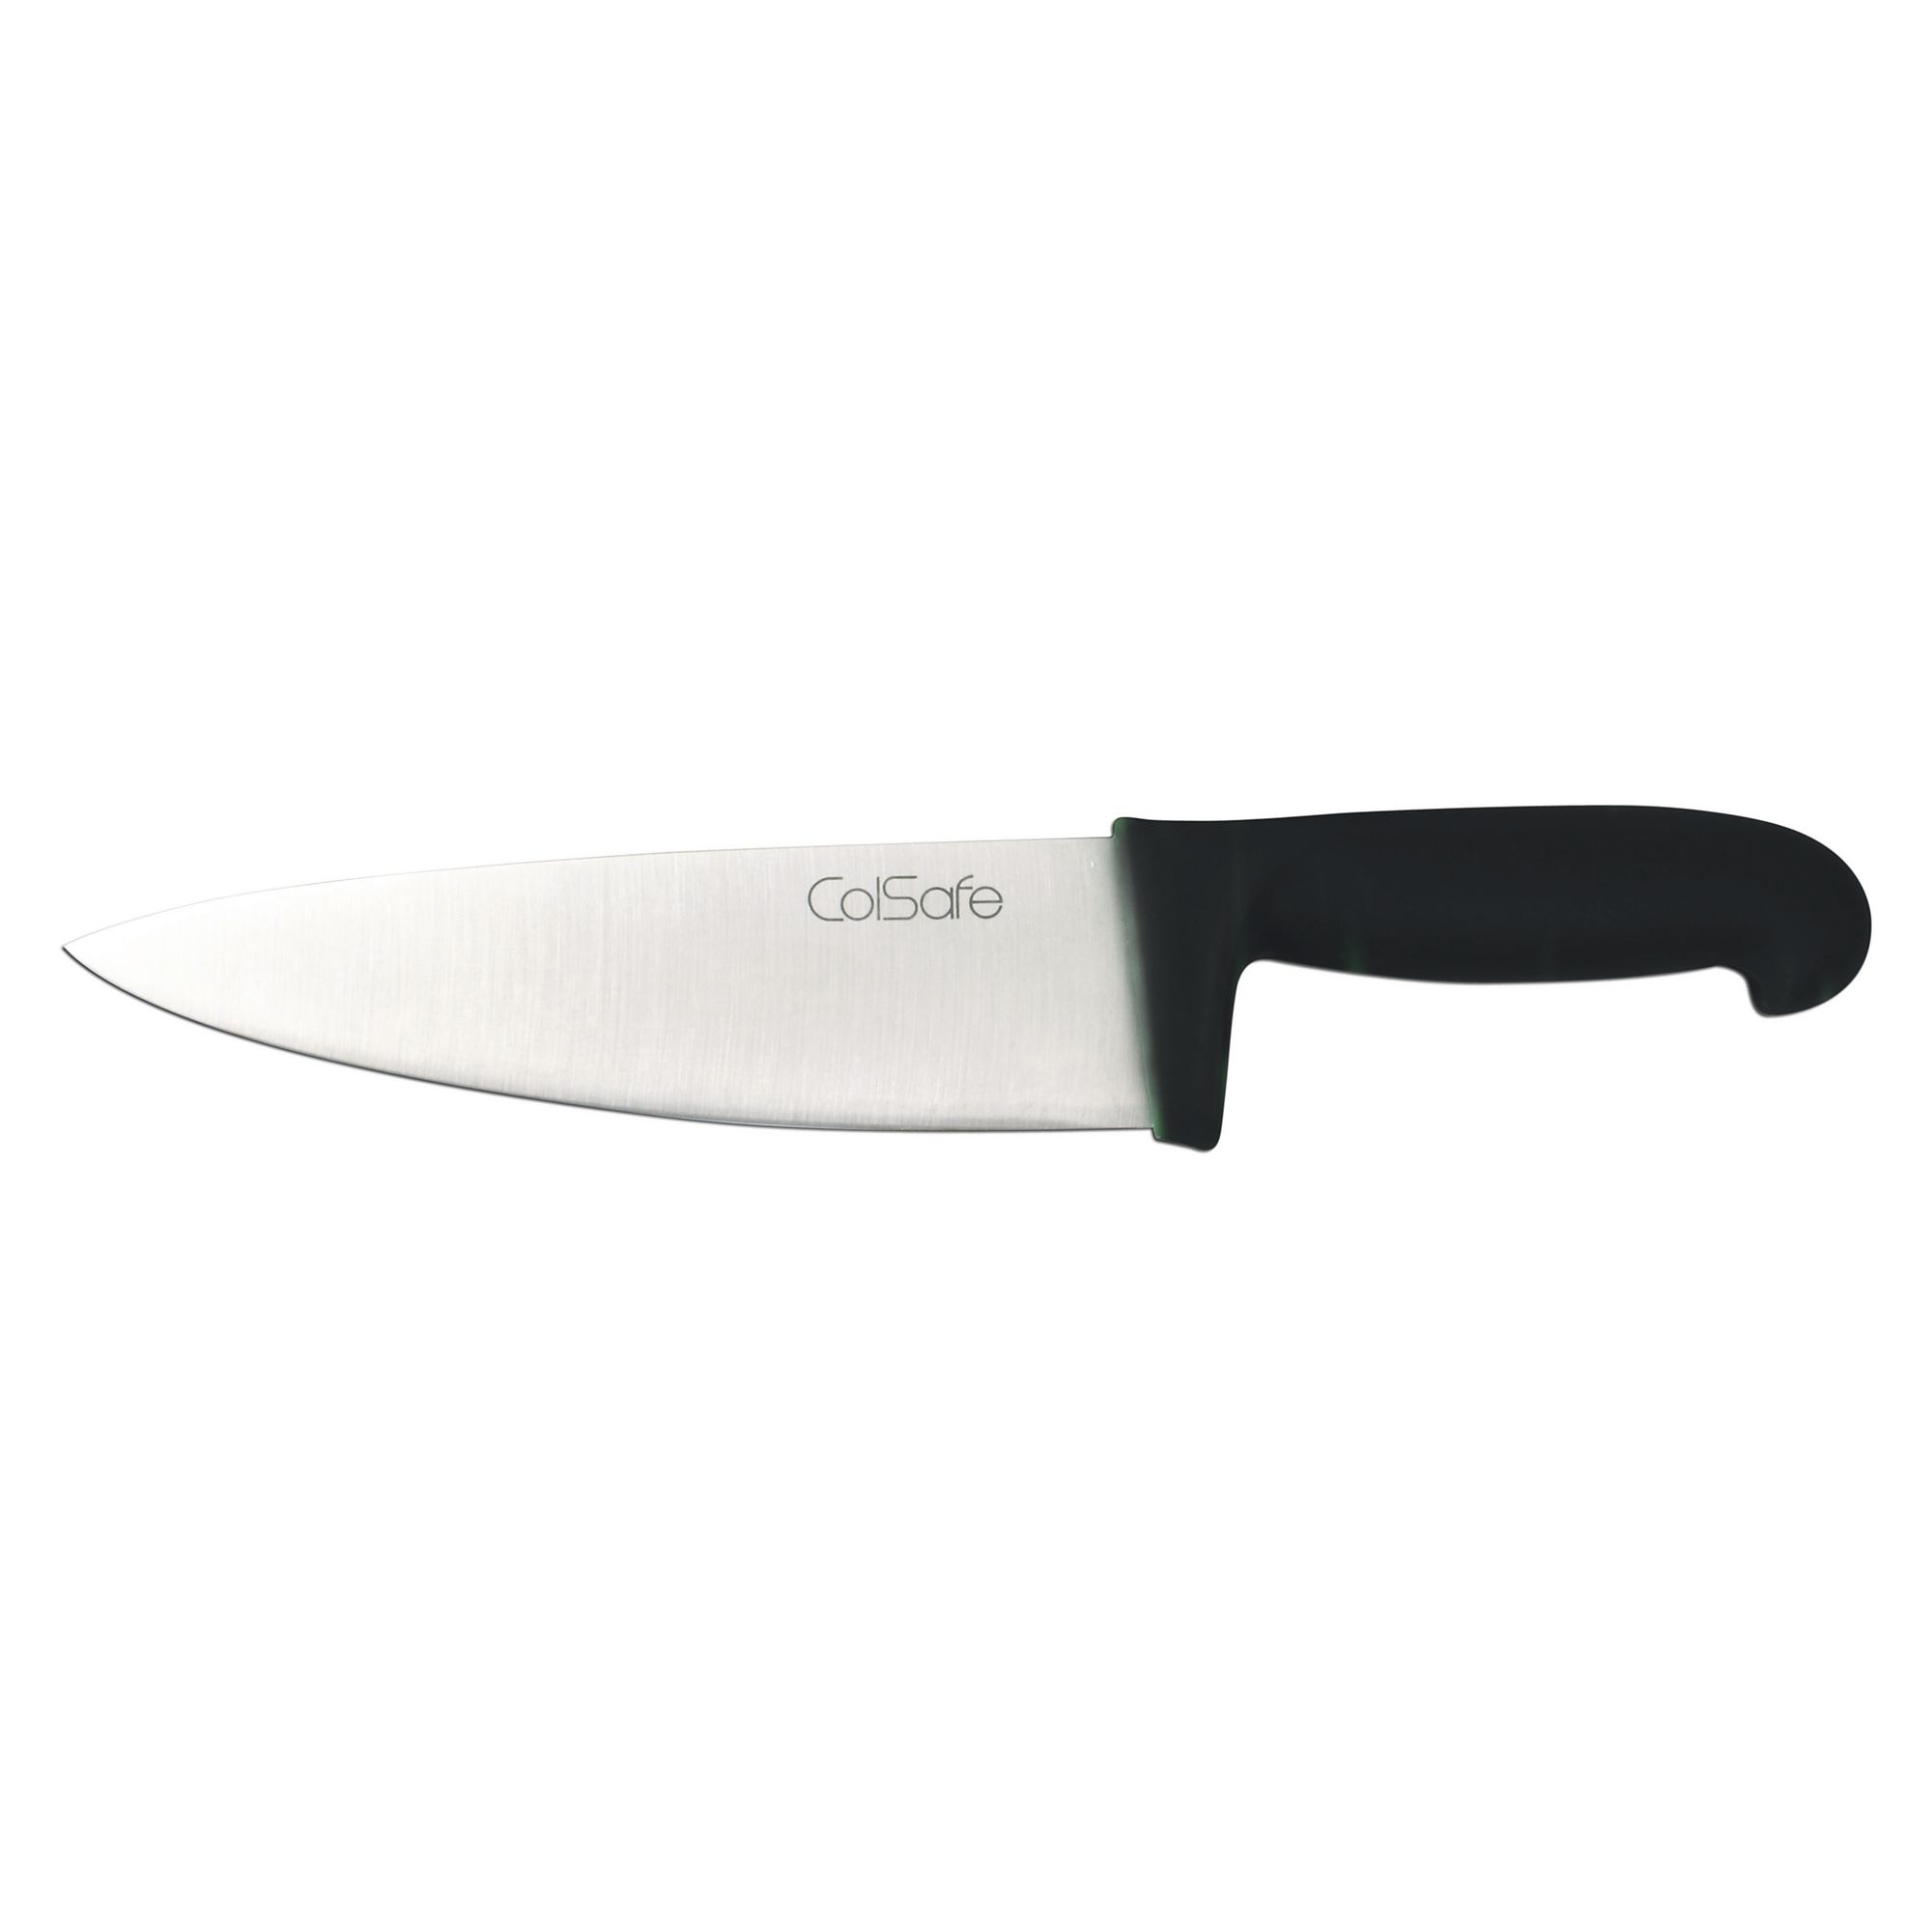 Cook's Knife - 203mm blade